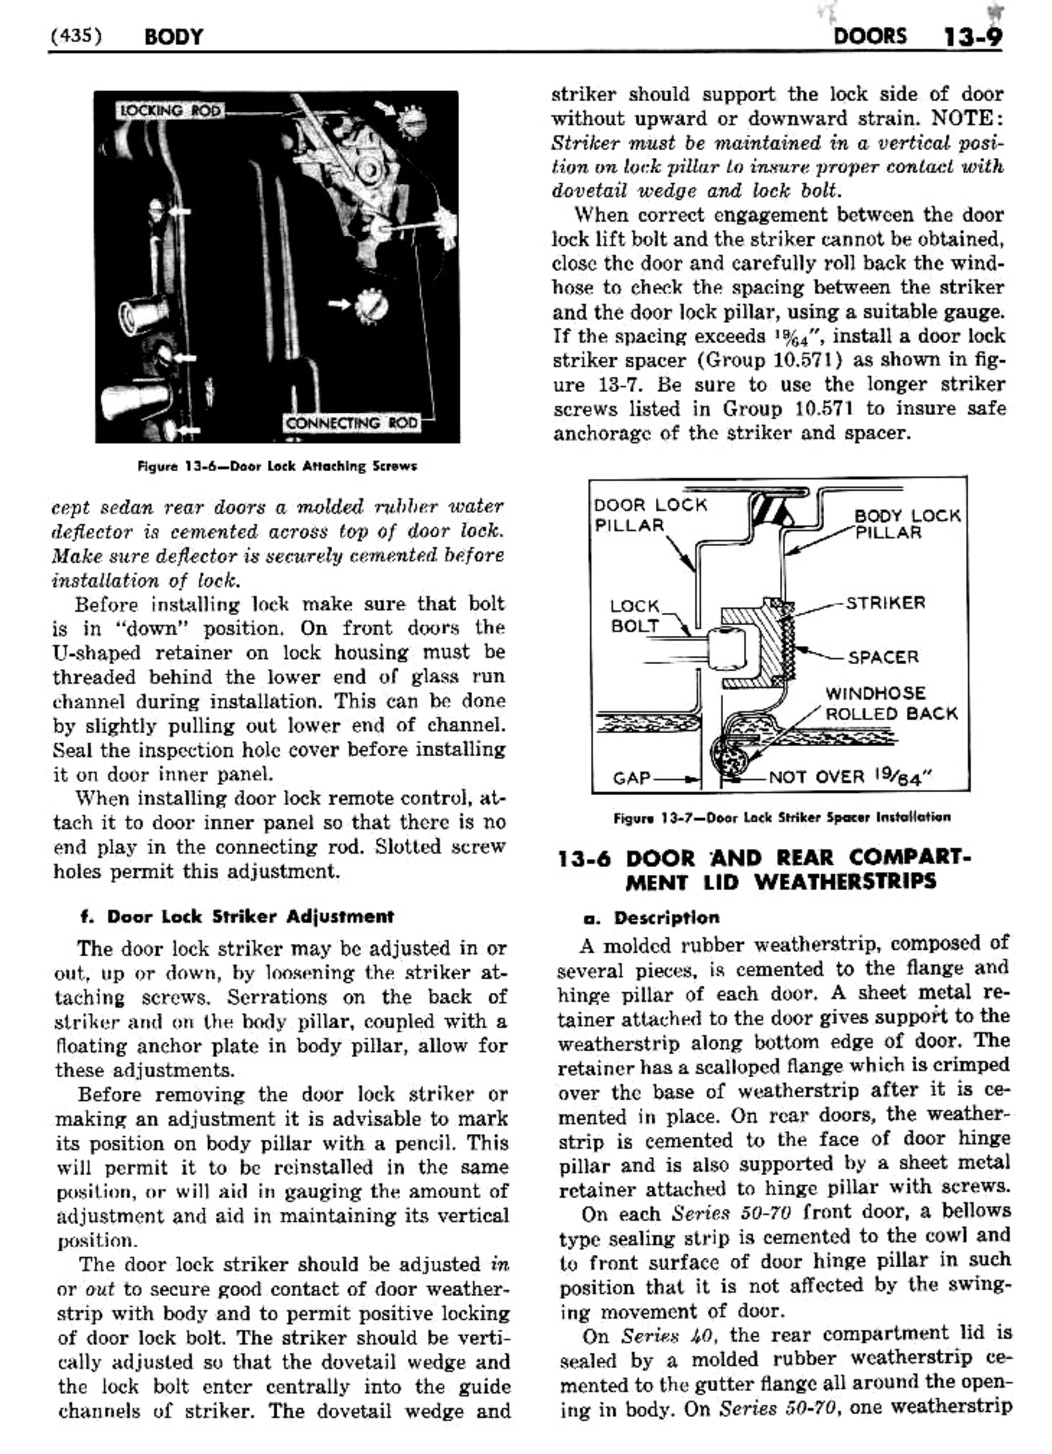 n_14 1951 Buick Shop Manual - Body-009-009.jpg